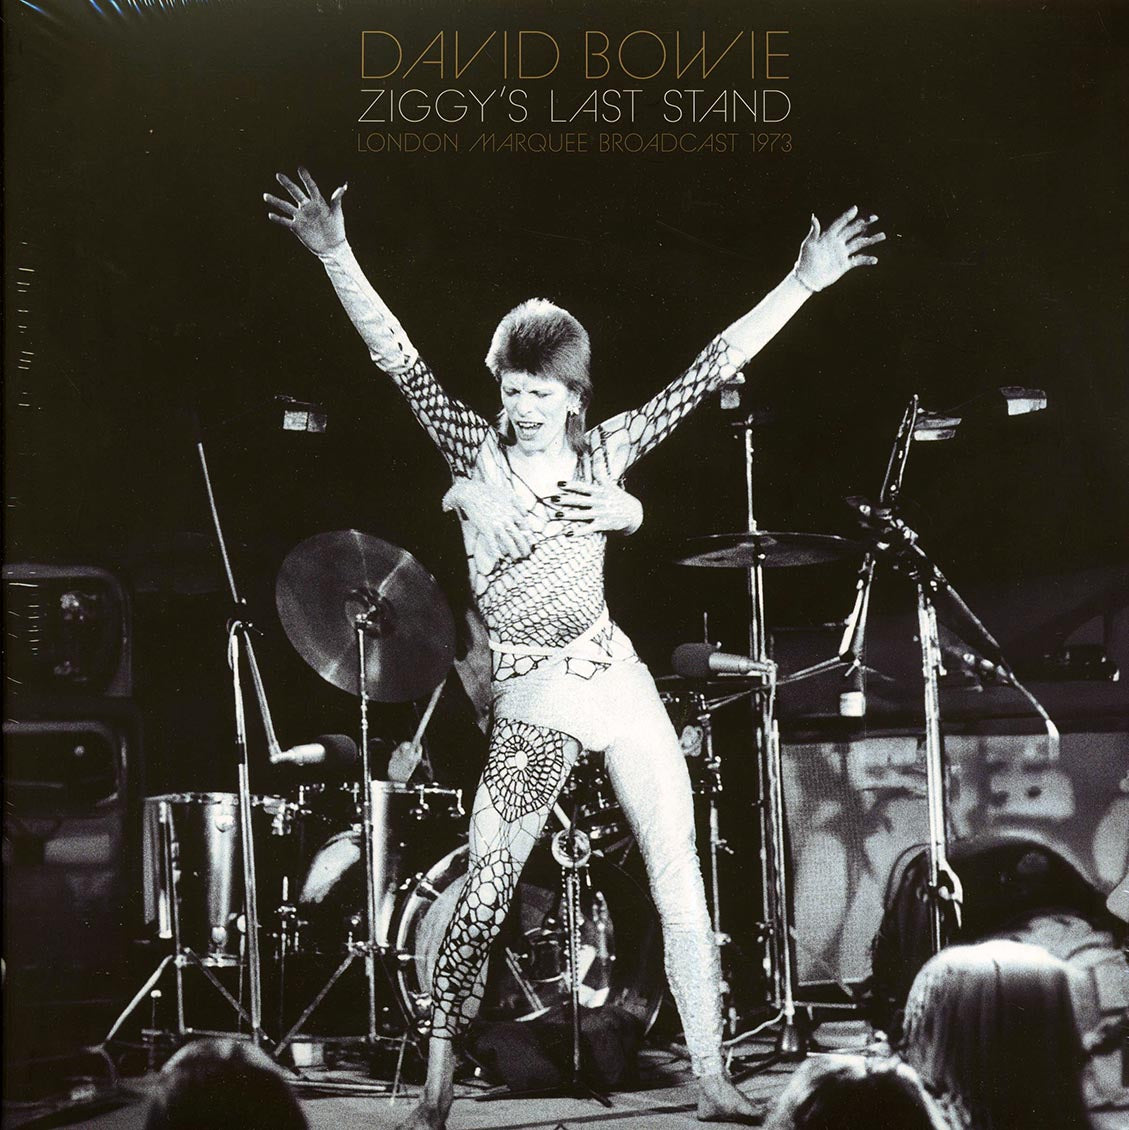 David Bowie - Ziggy's Last Stand: London Marquee Broadcast 1973 (2xLP) - Vinyl LP